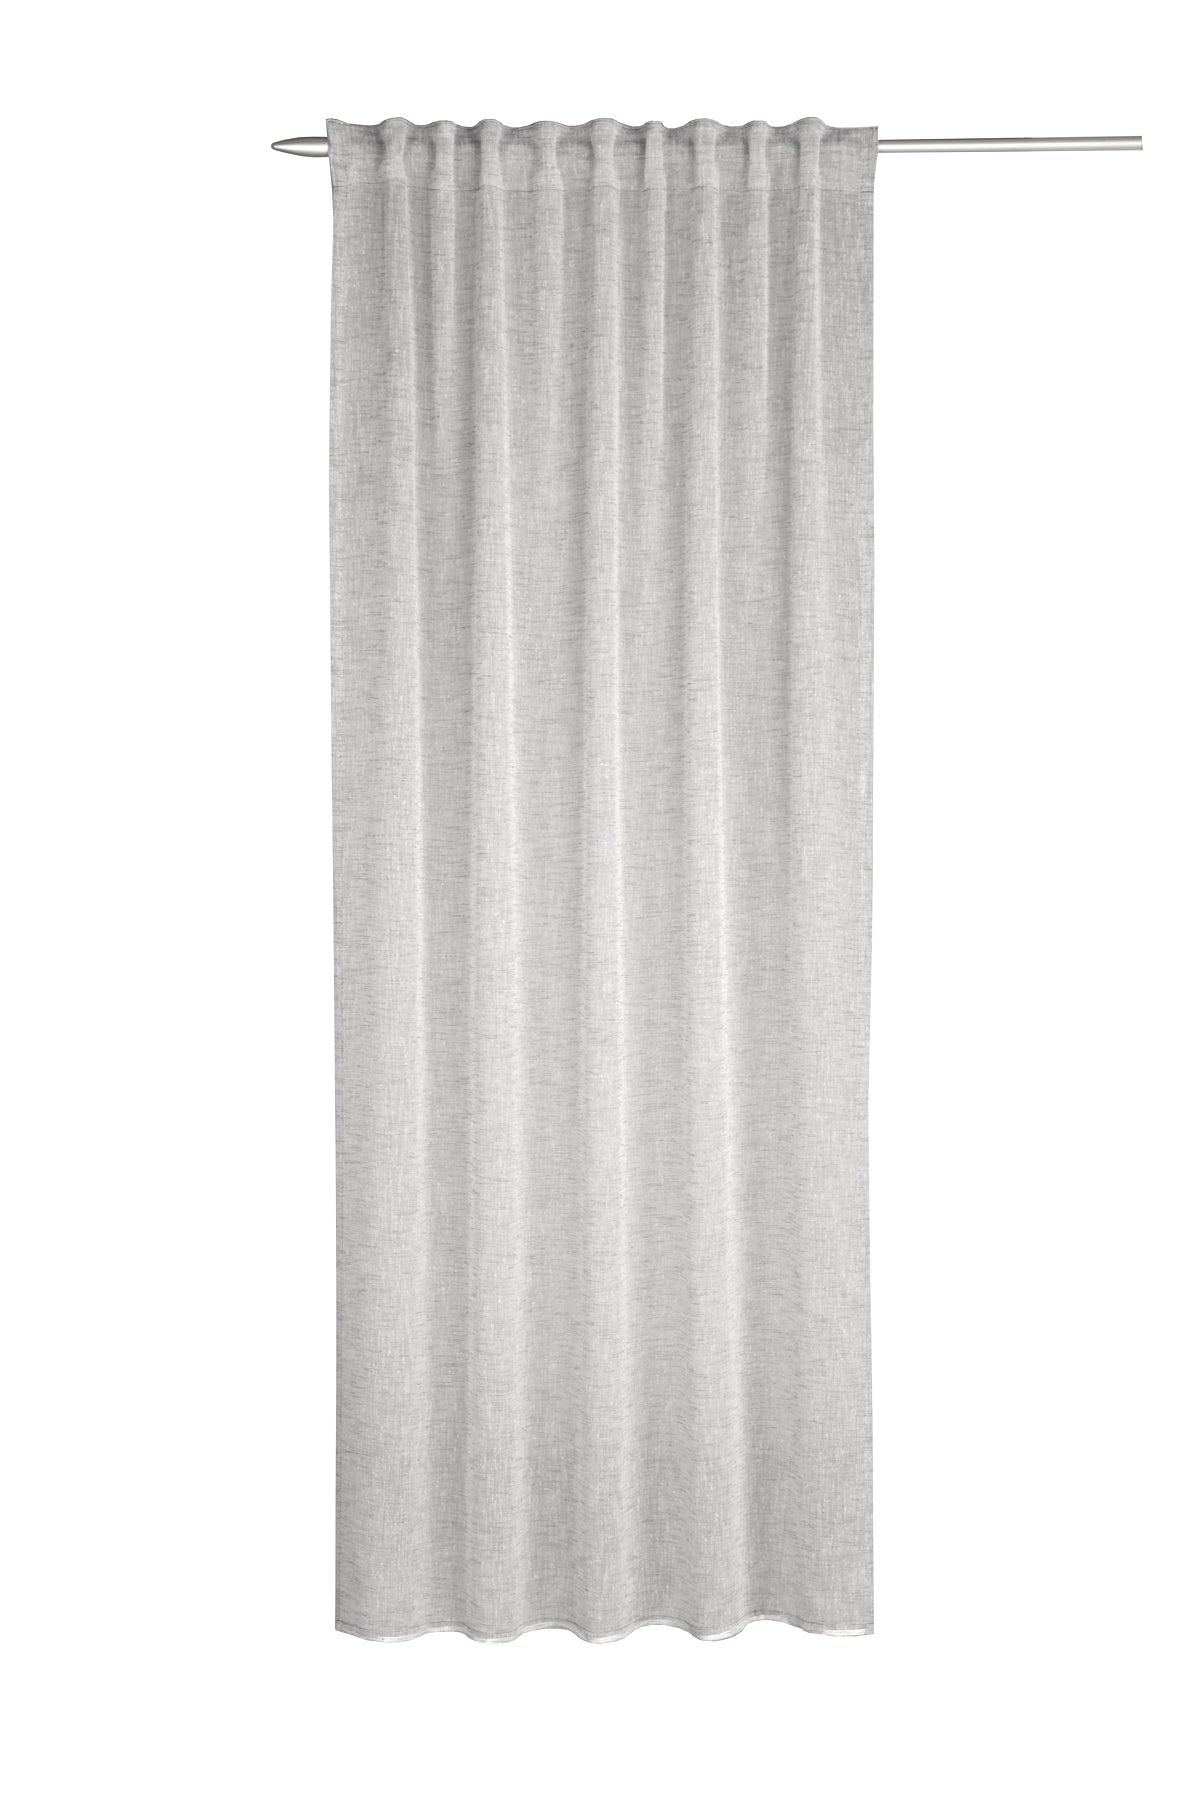 Day curtain delicate gray Maja